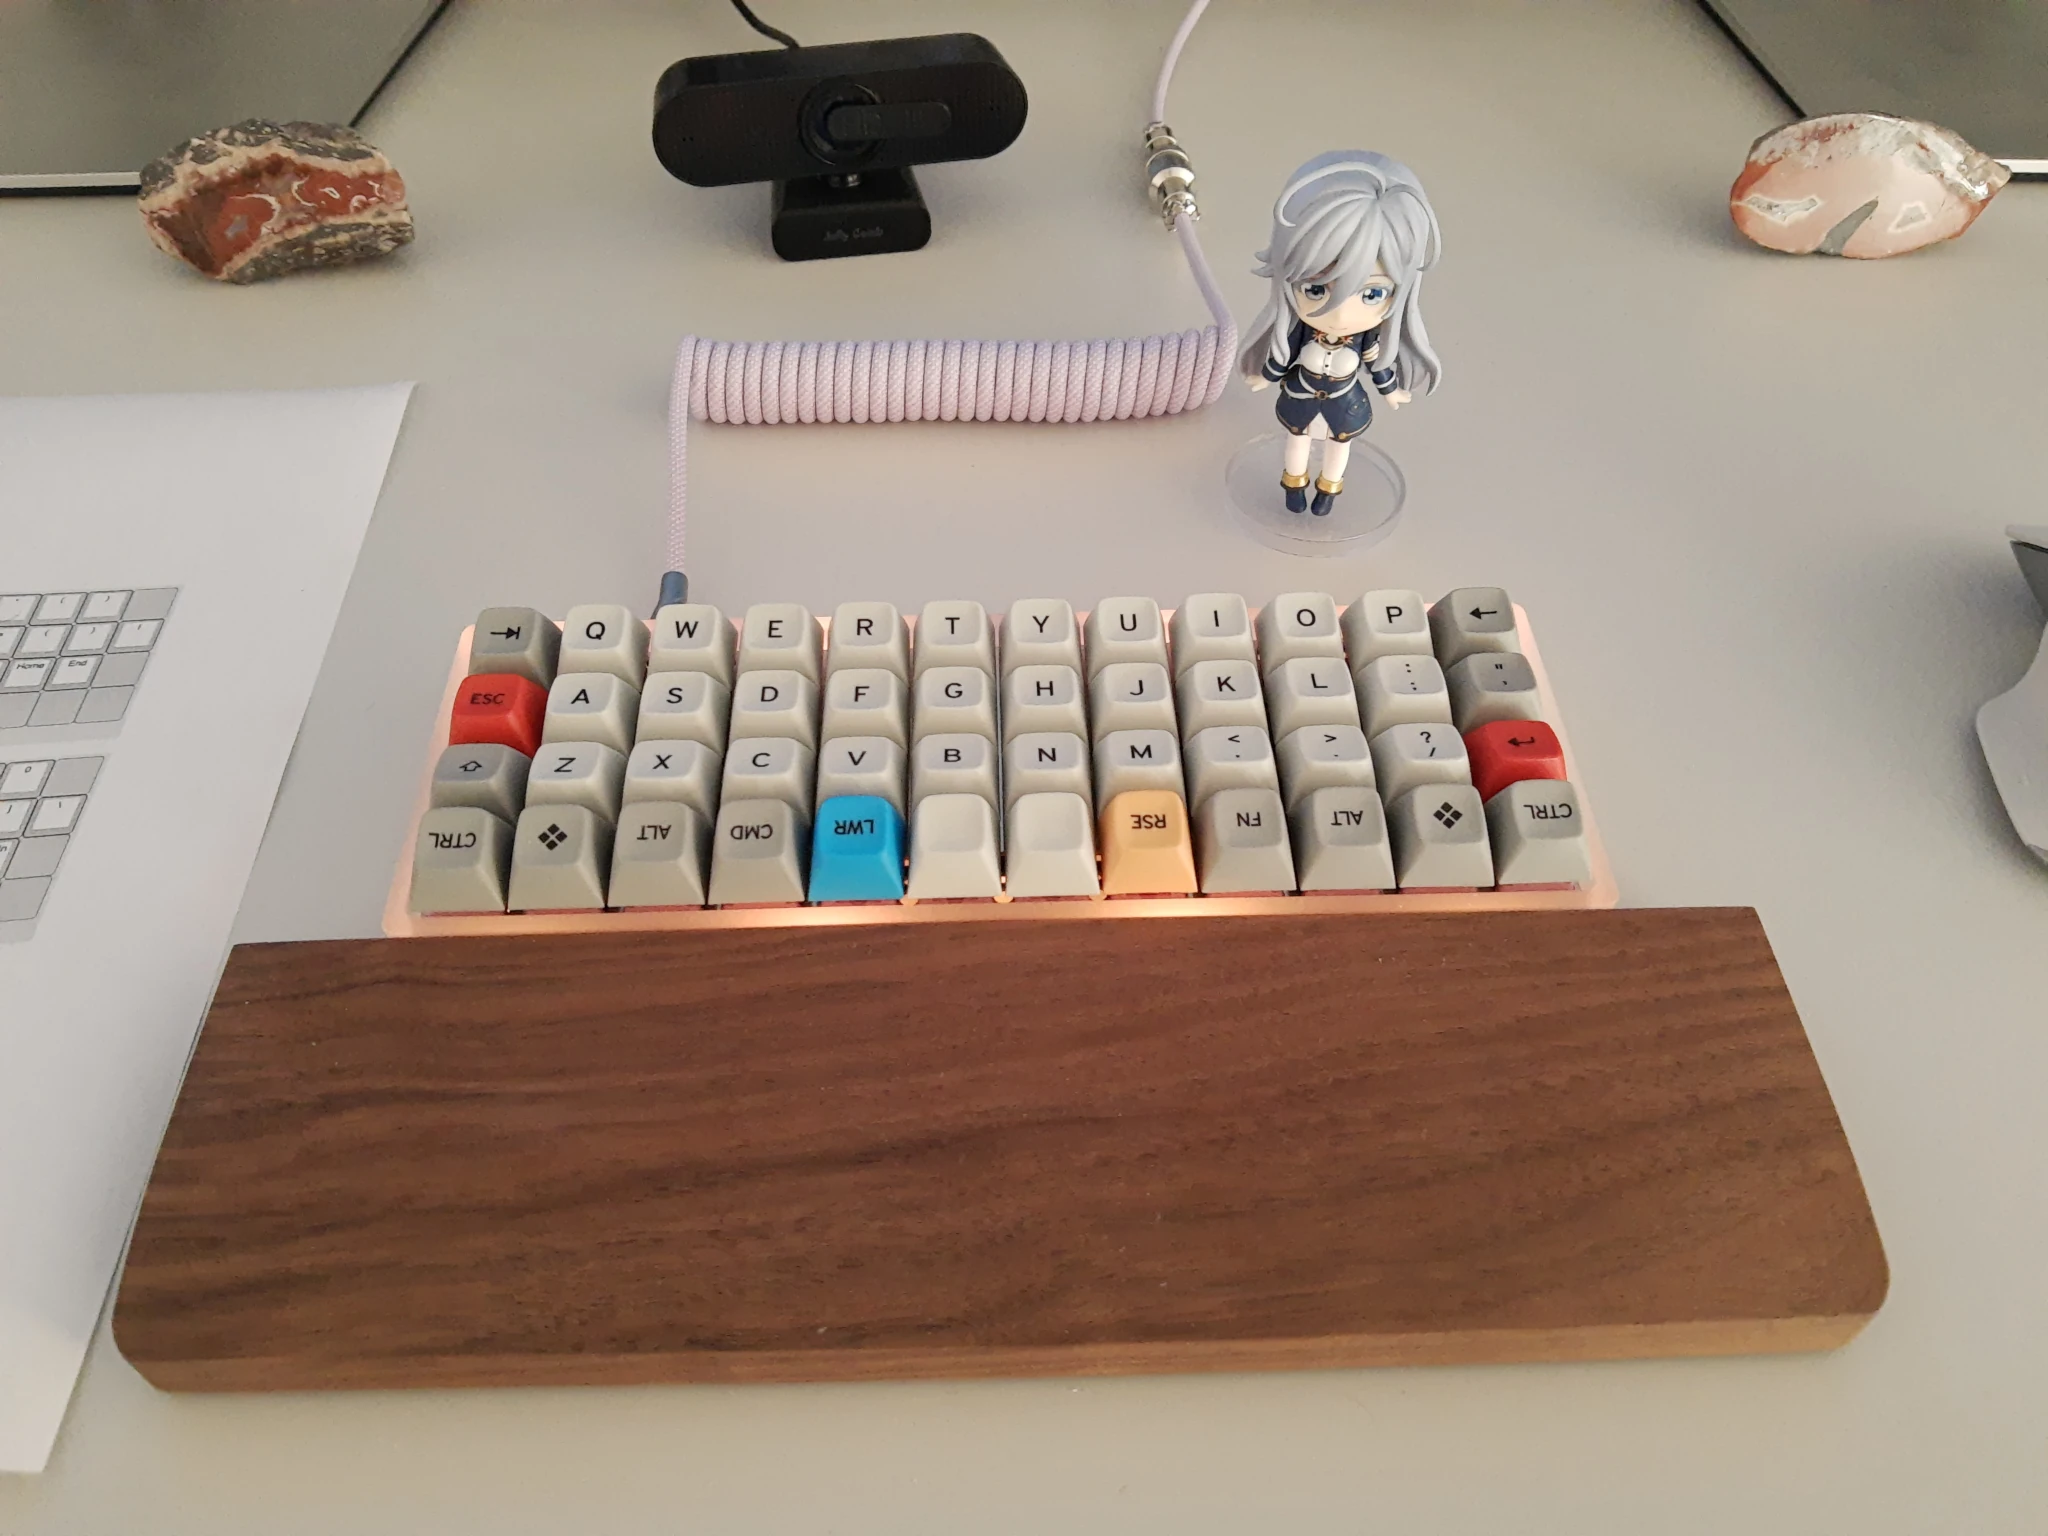 Finalized Planck keyboard